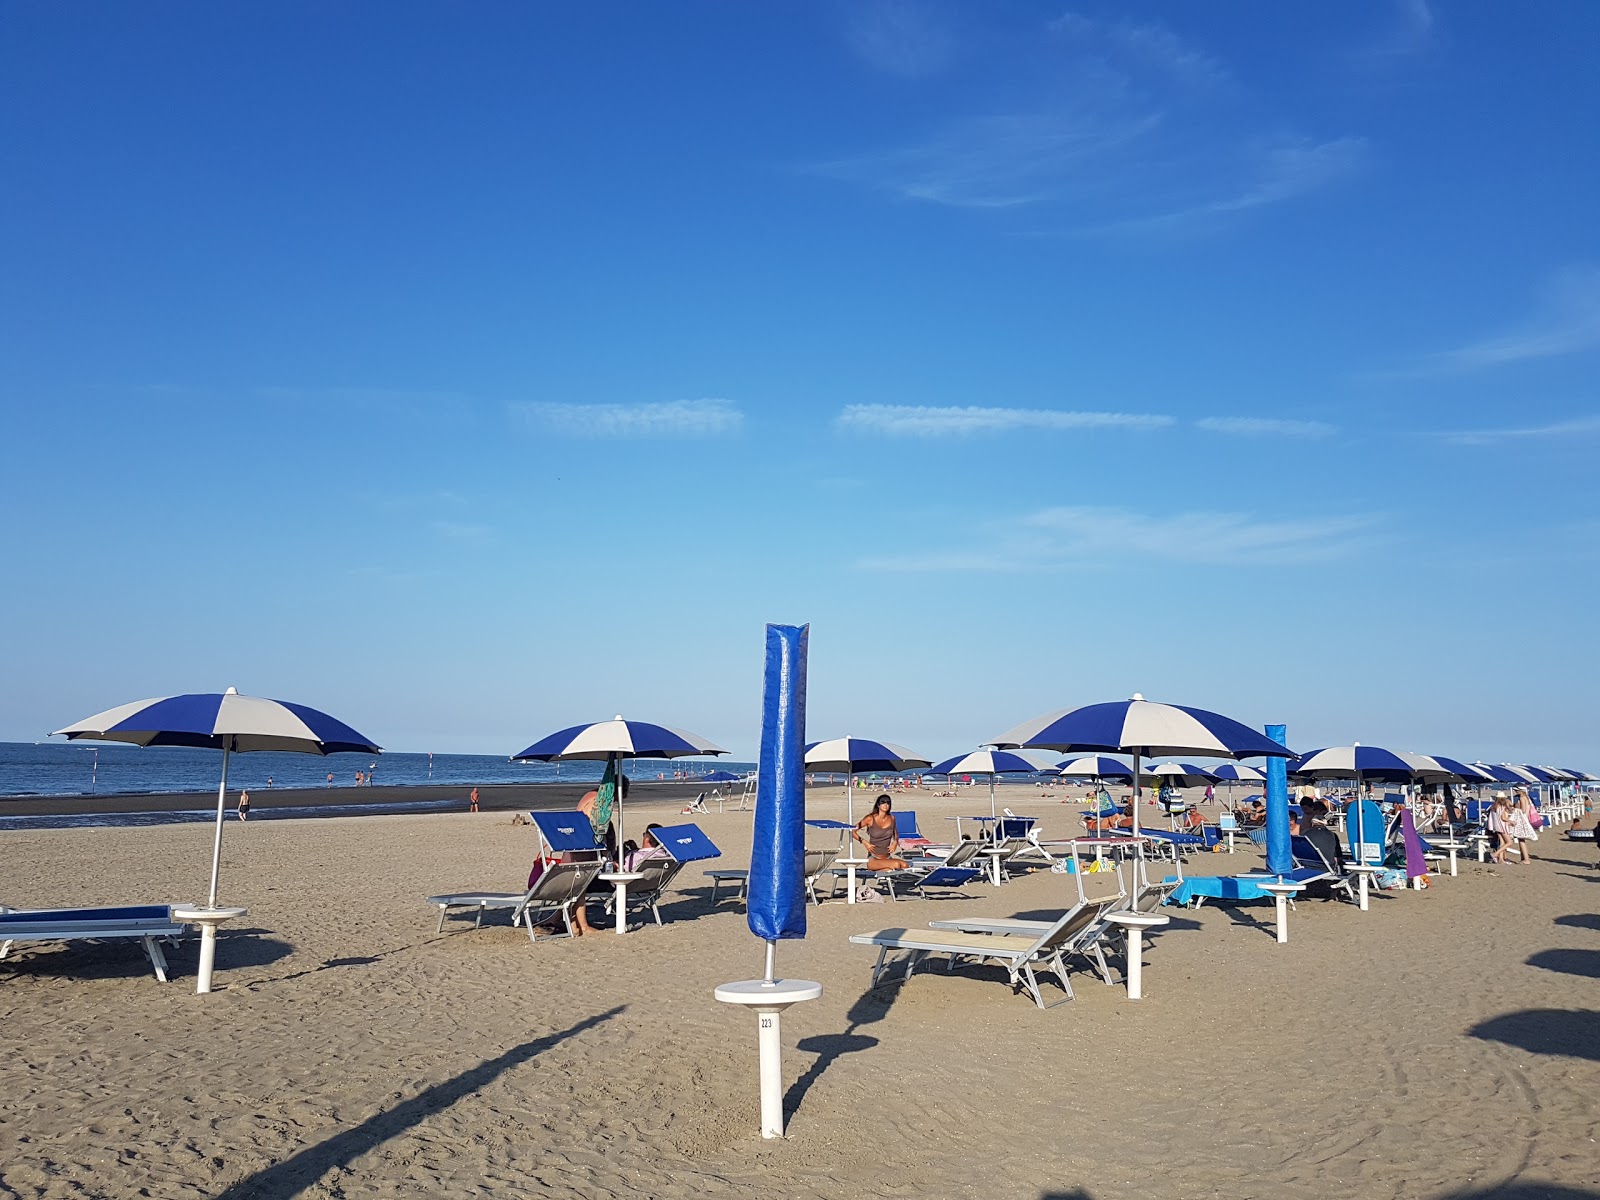 Foto de Spiaggia Isola Albarella - lugar popular entre os apreciadores de relaxamento